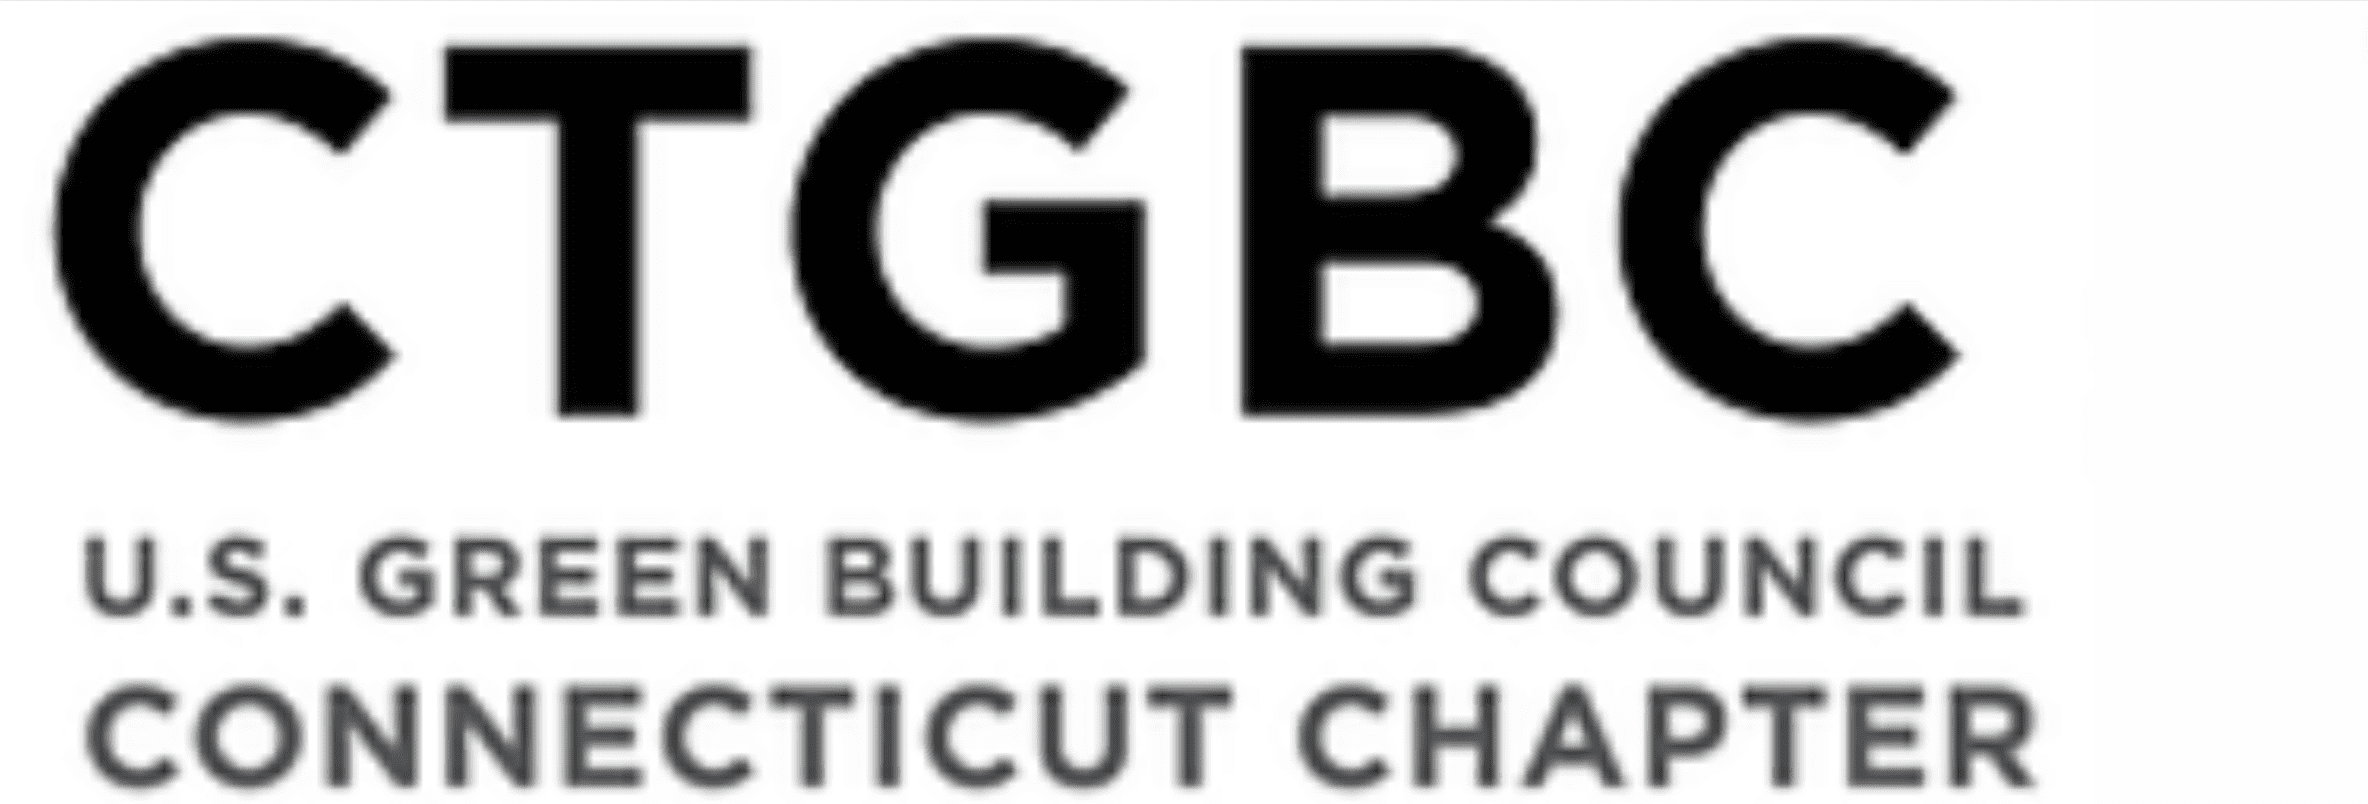 Connecticut Green Building Council logo